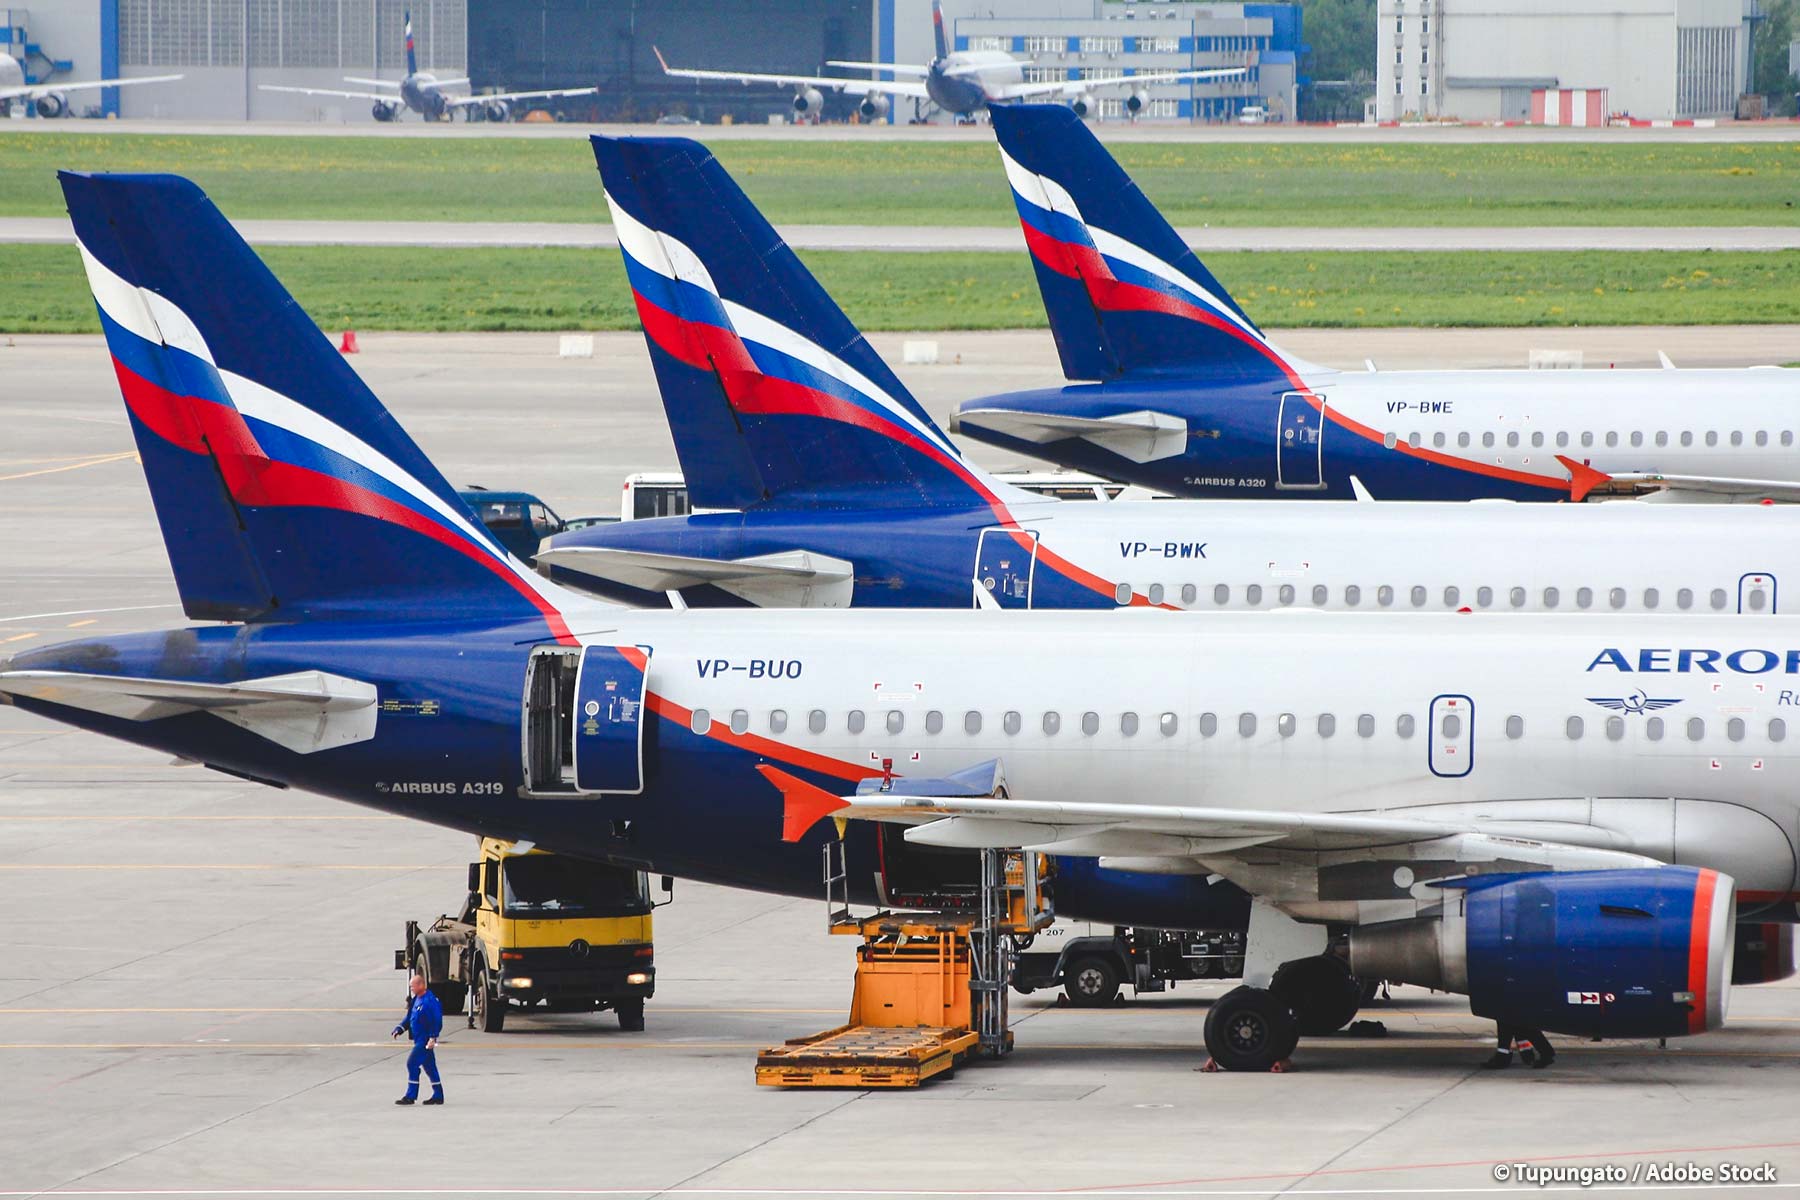 Rusia debe devolver aviones robados, demanda eurodiputados |  Noticias |  Parlamento Europeo